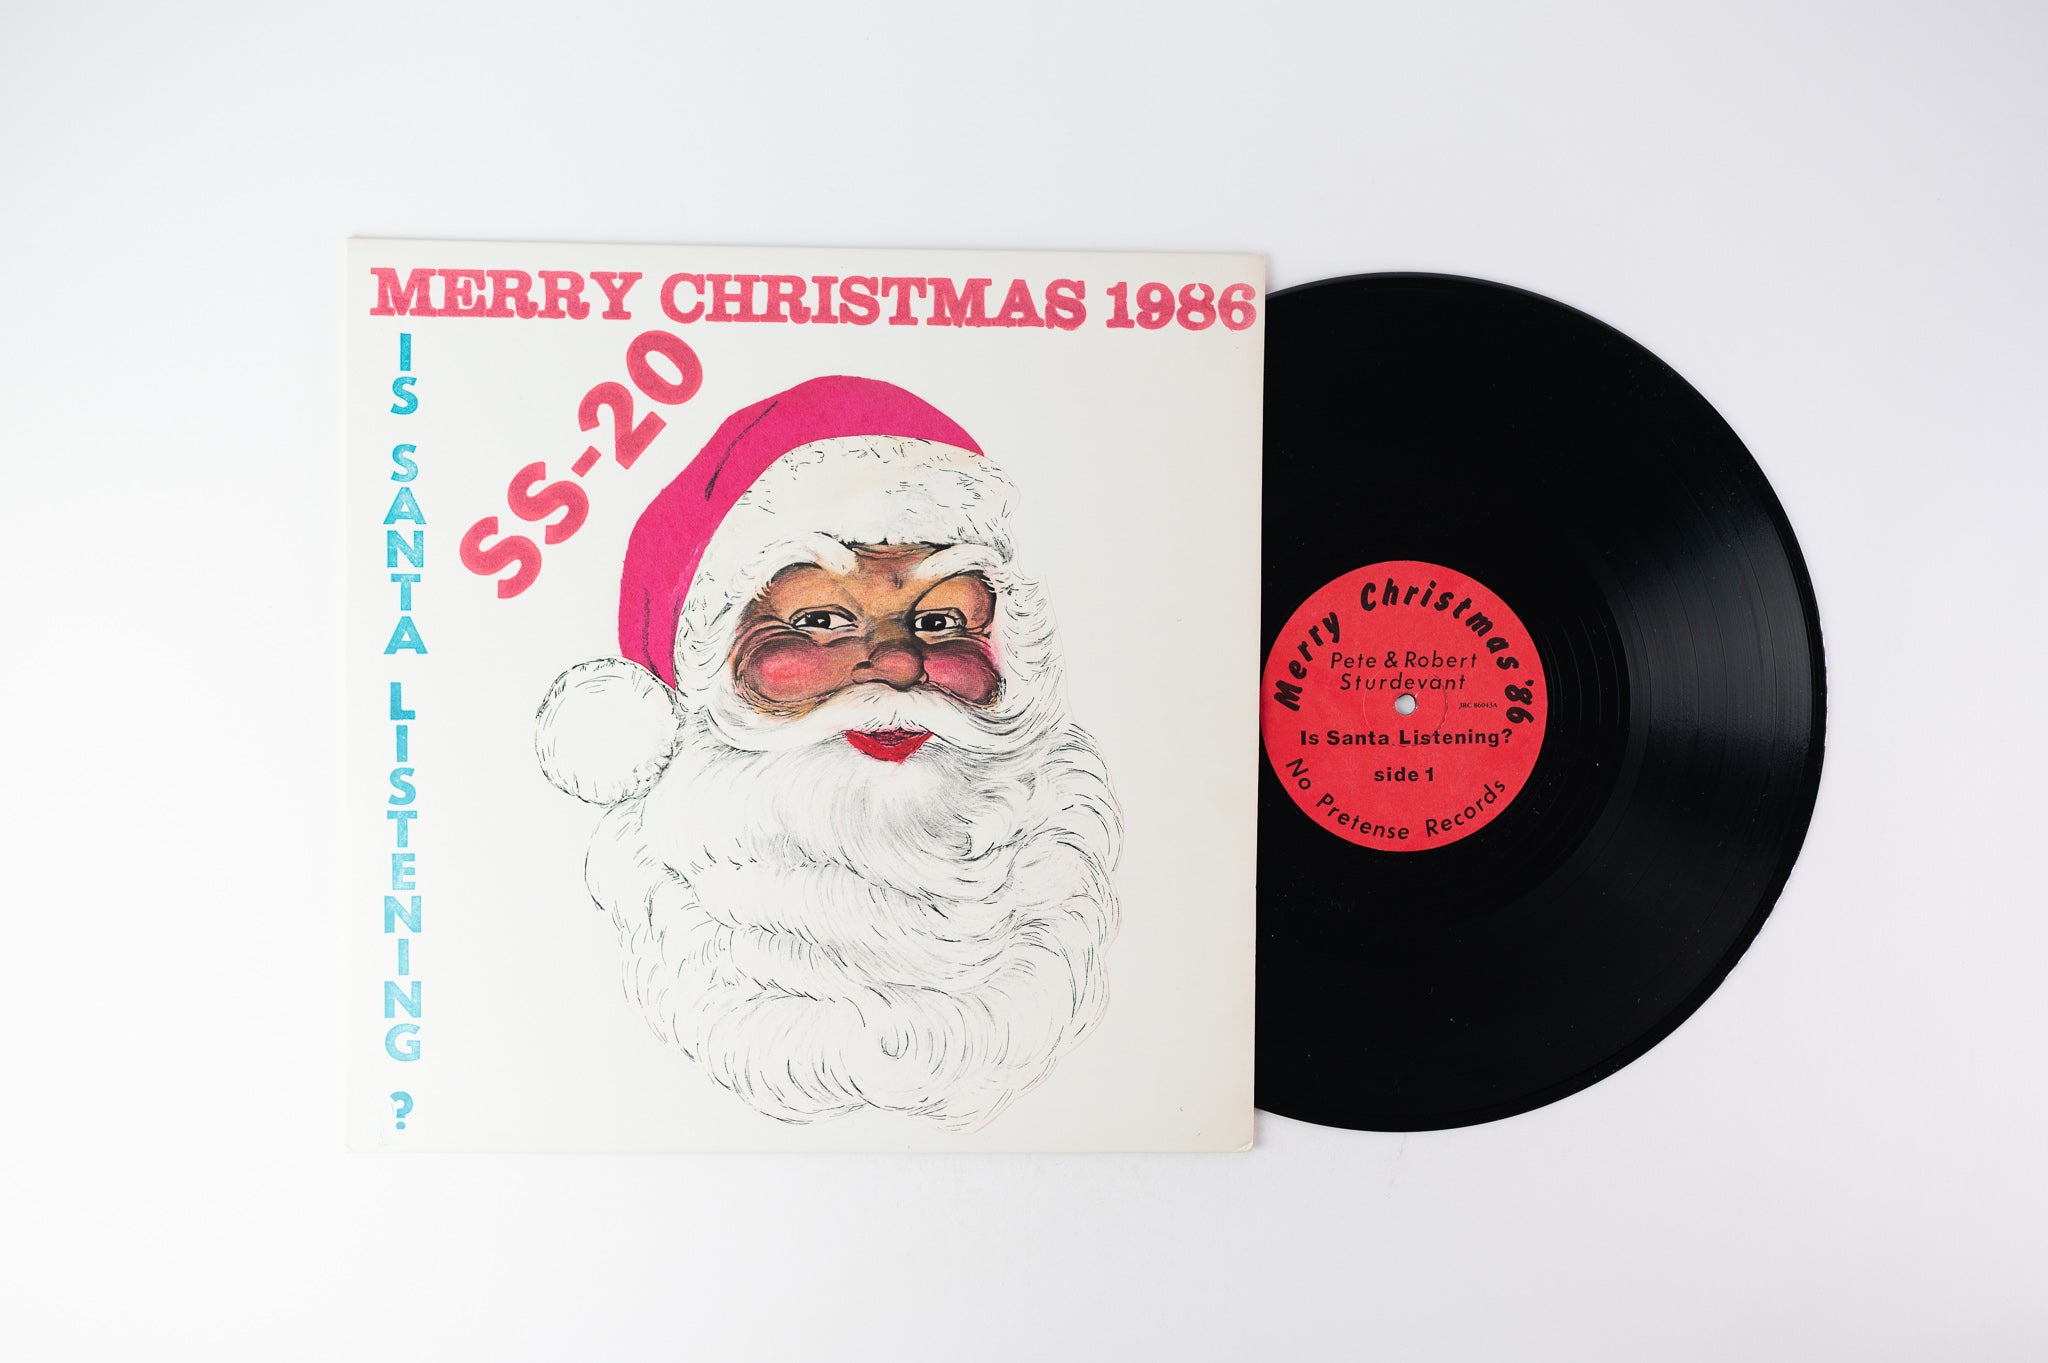 SS-20 - Merry Christmas 1986: Is Santa Listening on No Pretense